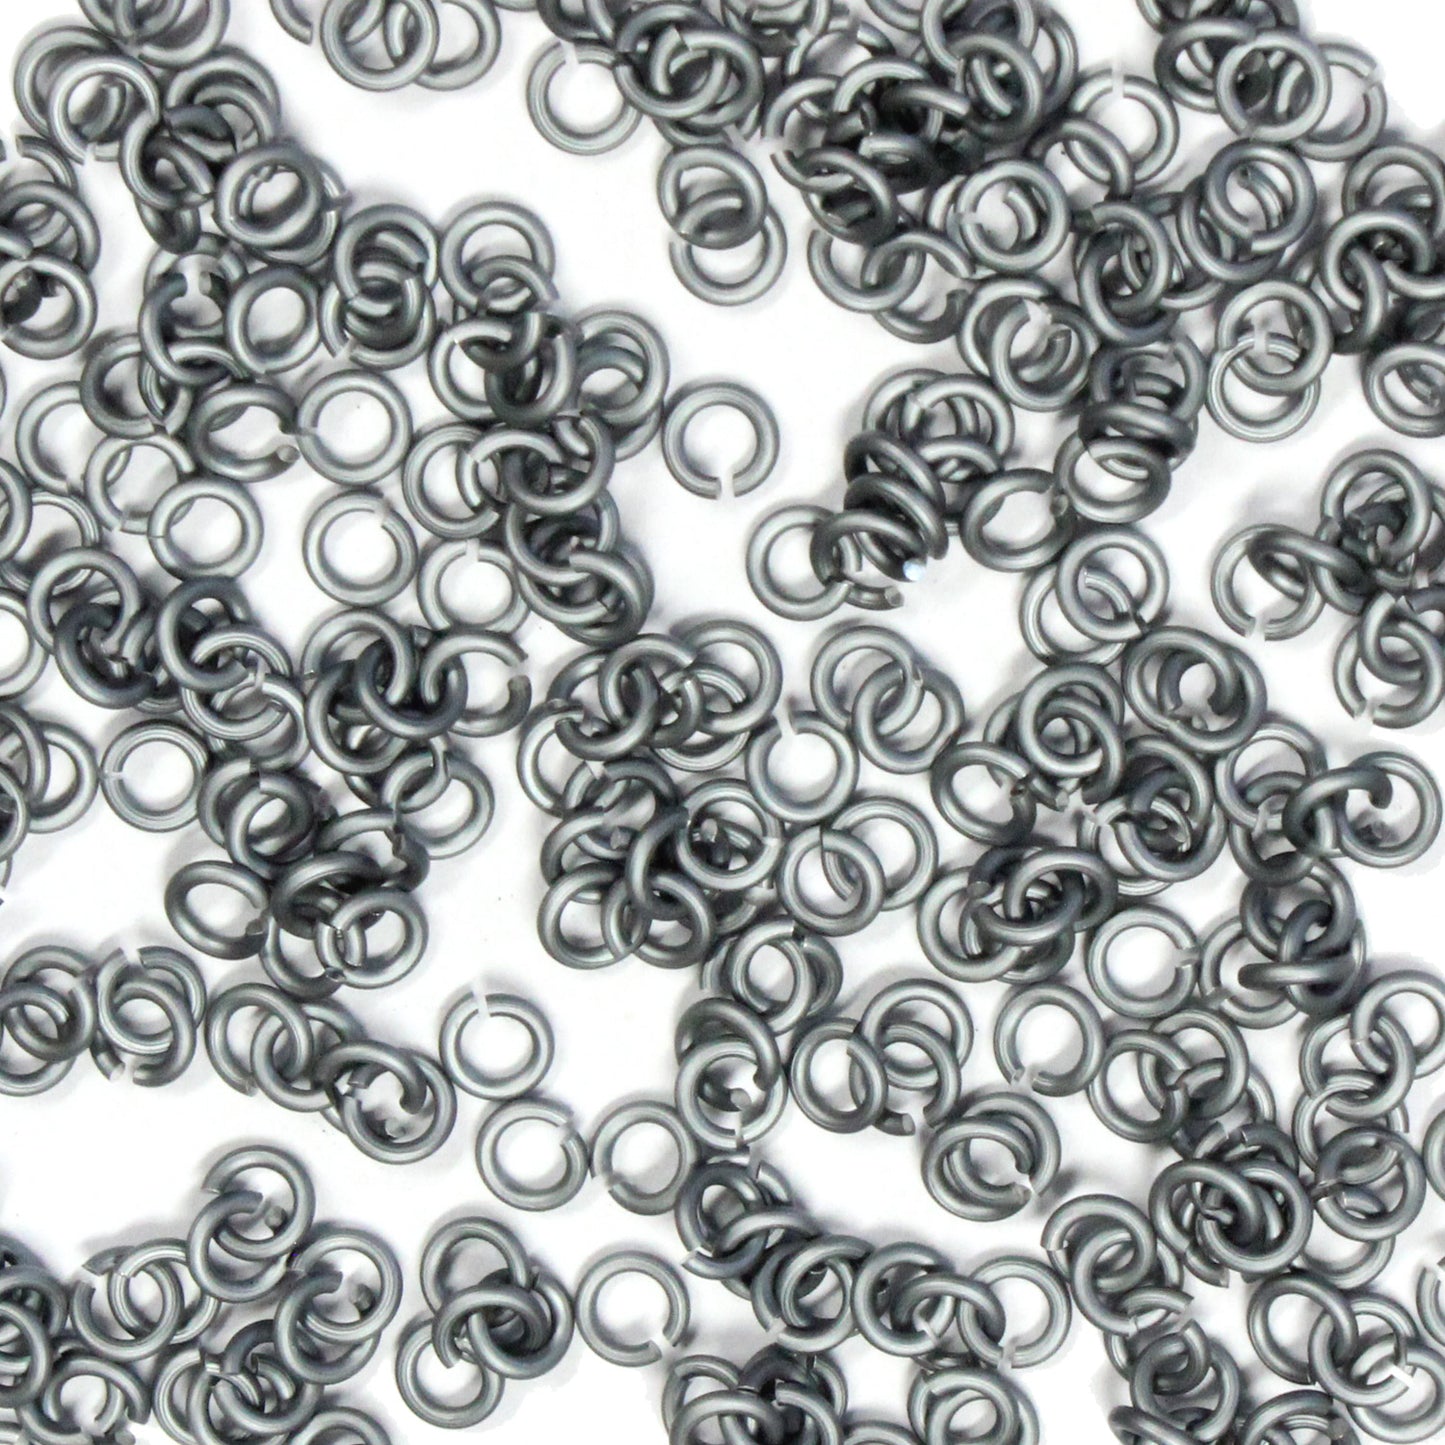 MATTE BLACK ICE / 2.4mm 20 GA Jump Rings / 5 Gram Pack (approx 350) / sawcut round open anodized aluminum